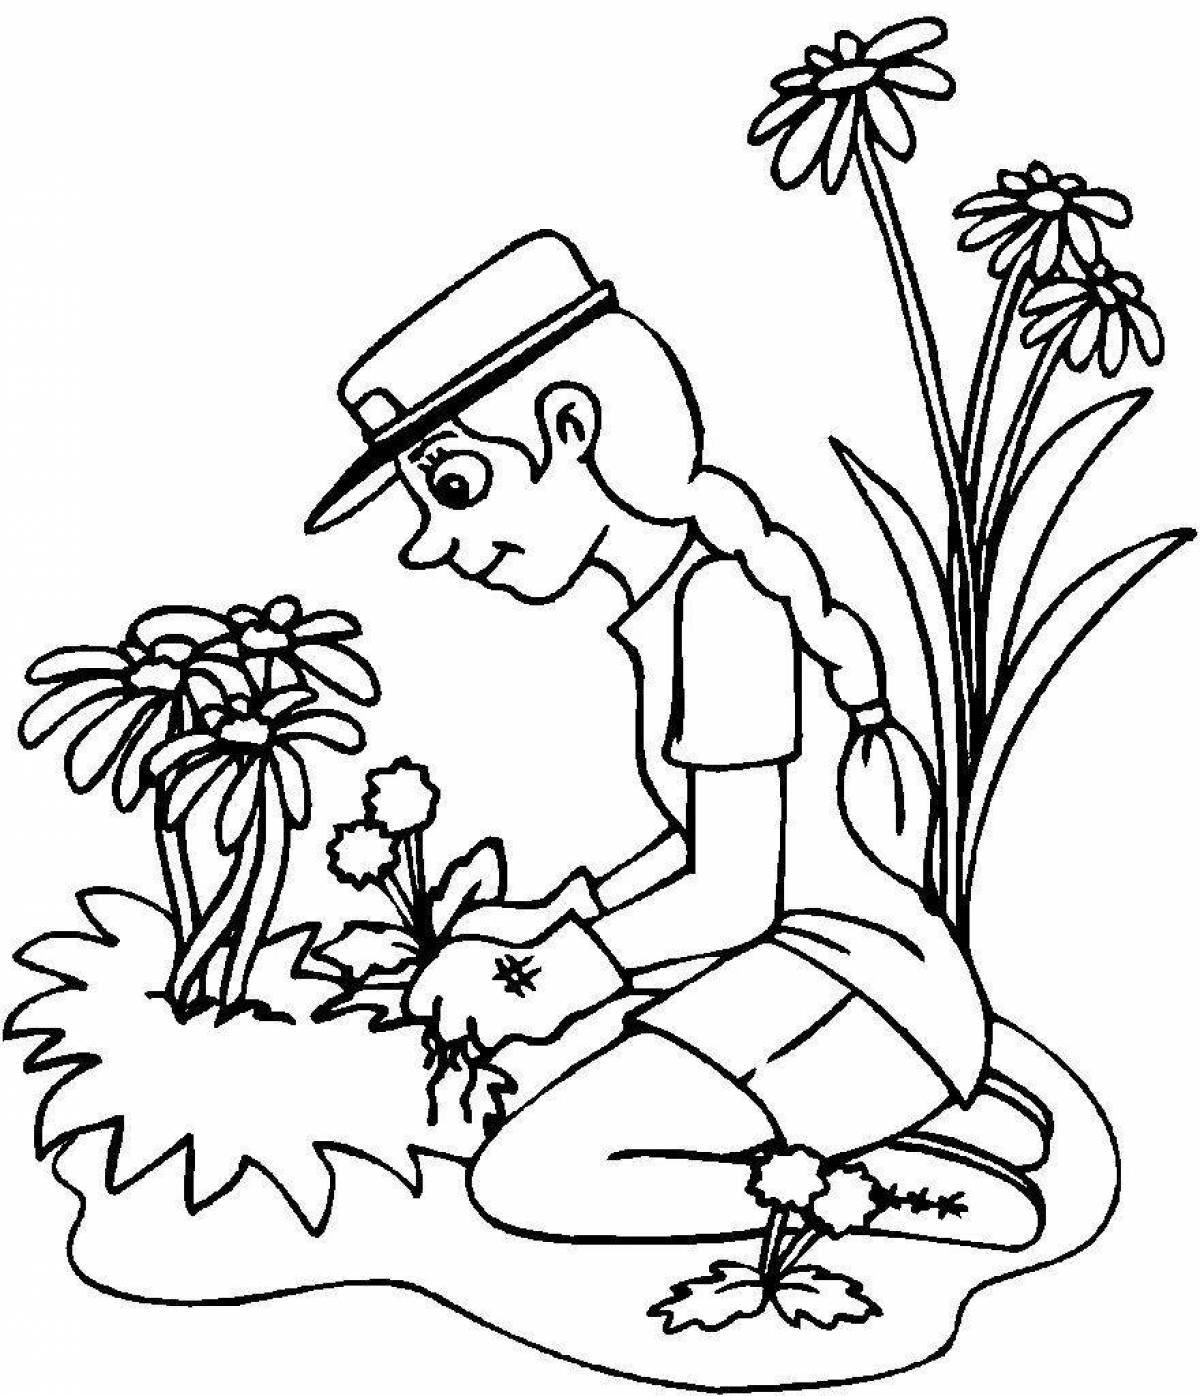 Coloring book funny gardener